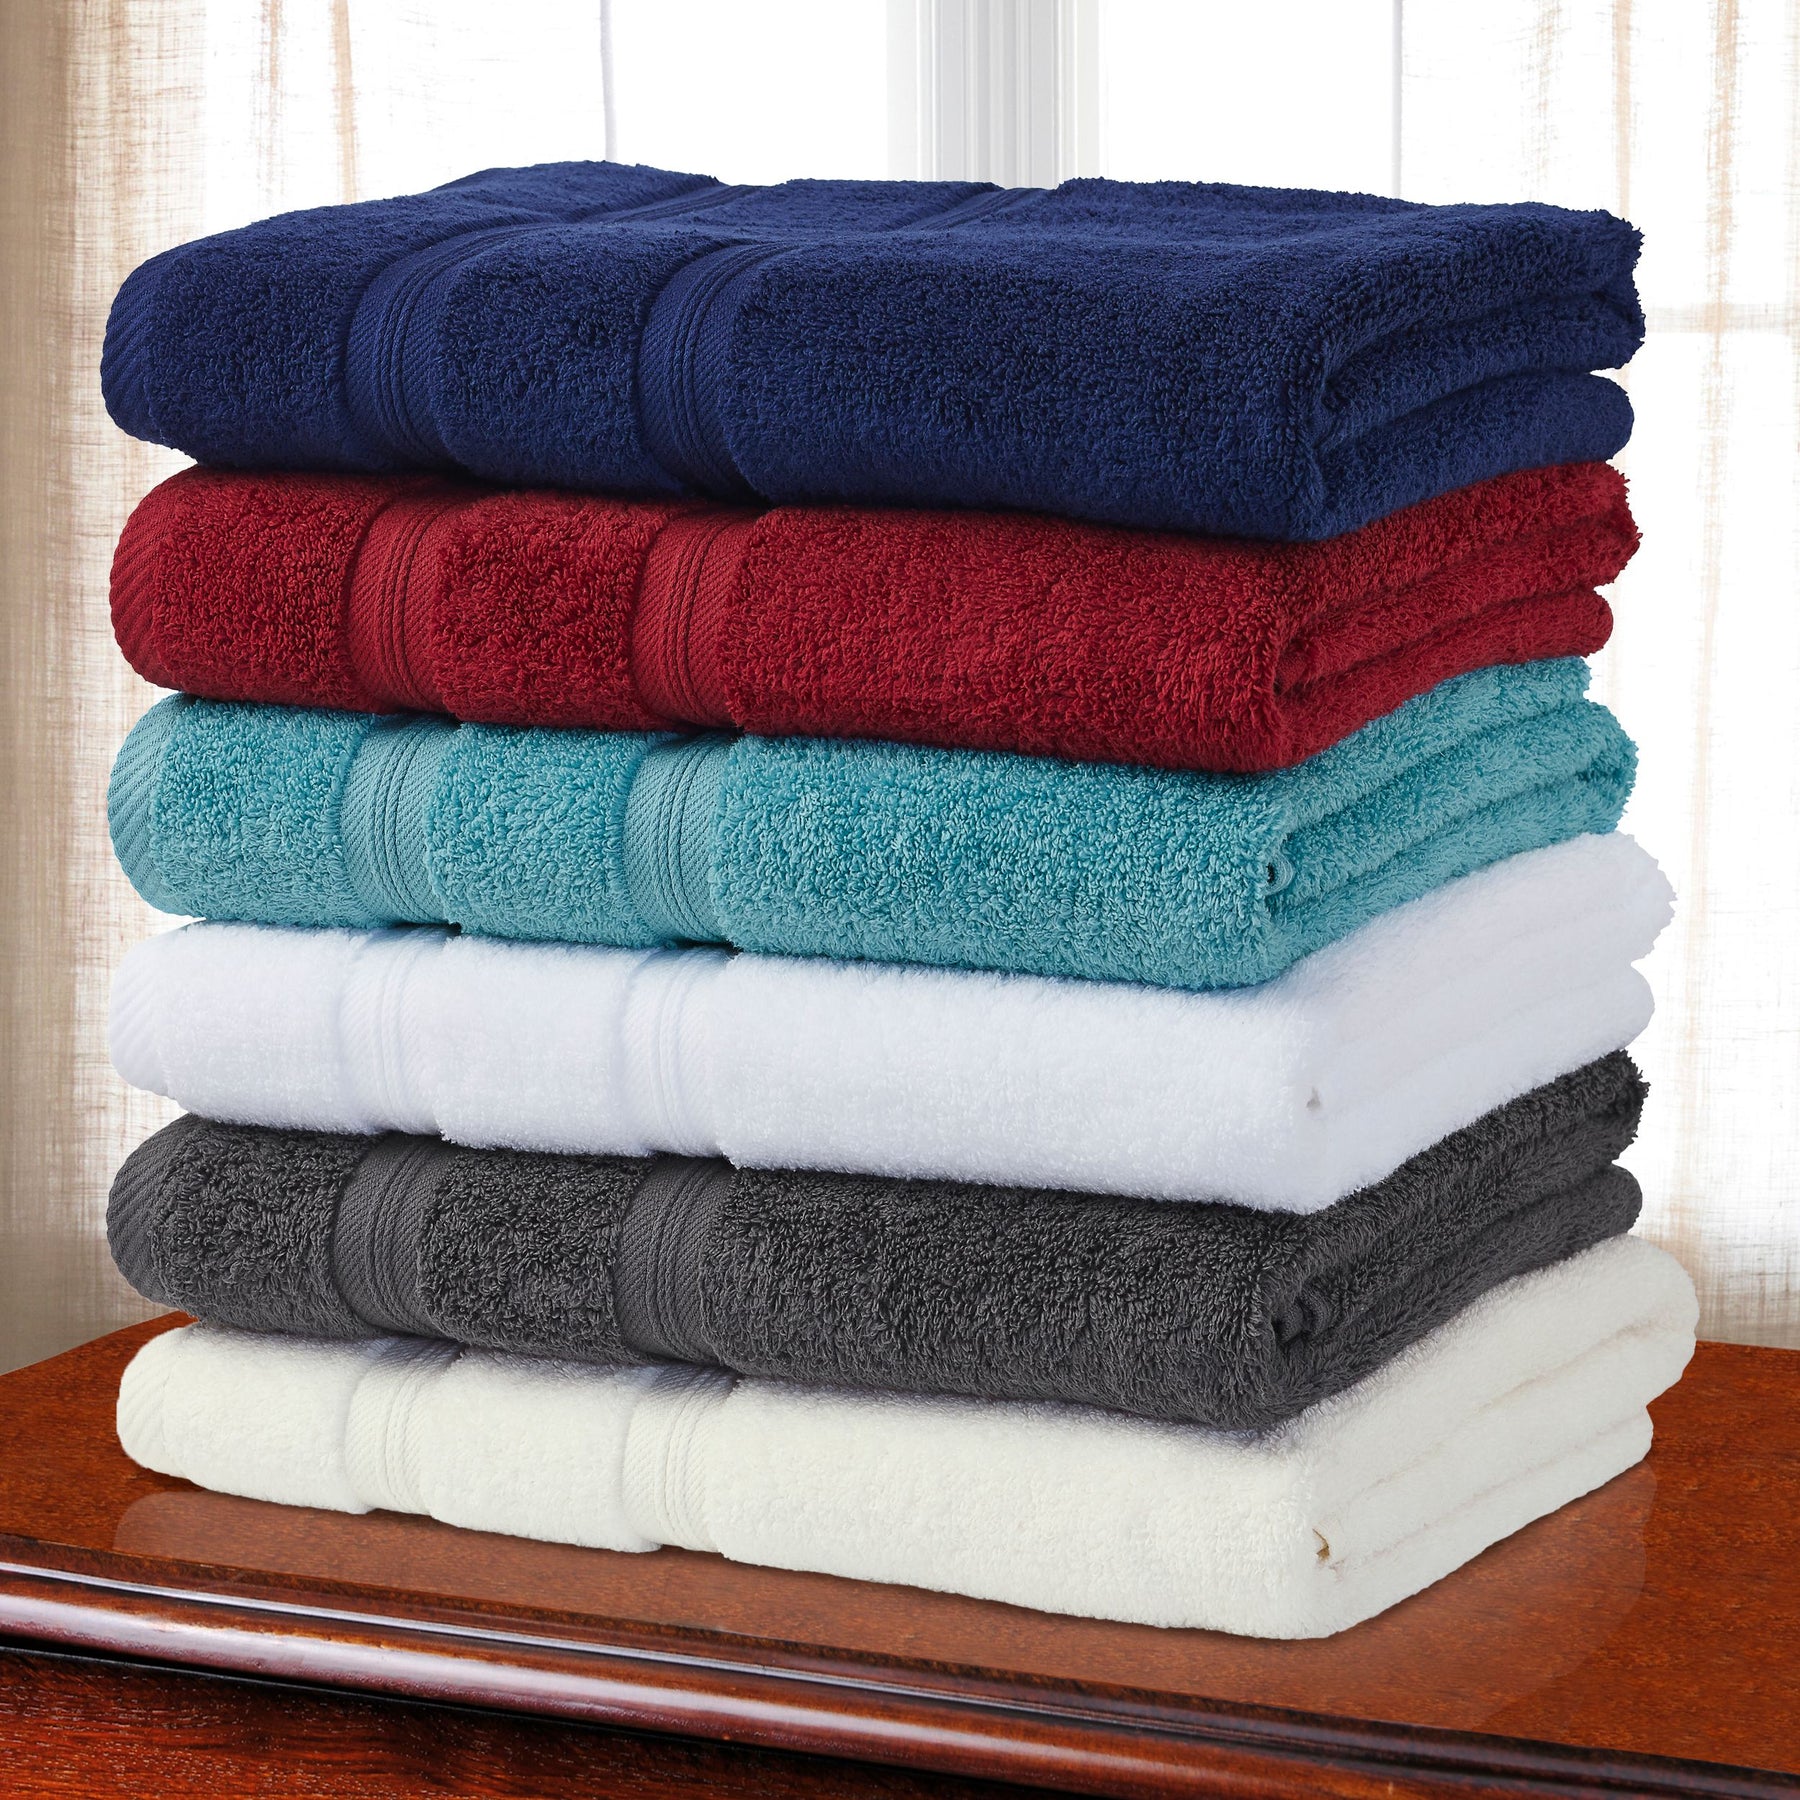  Superior Smart Dry Zero Twist Cotton 6-Piece Assorted Towel Set - Navy Blue